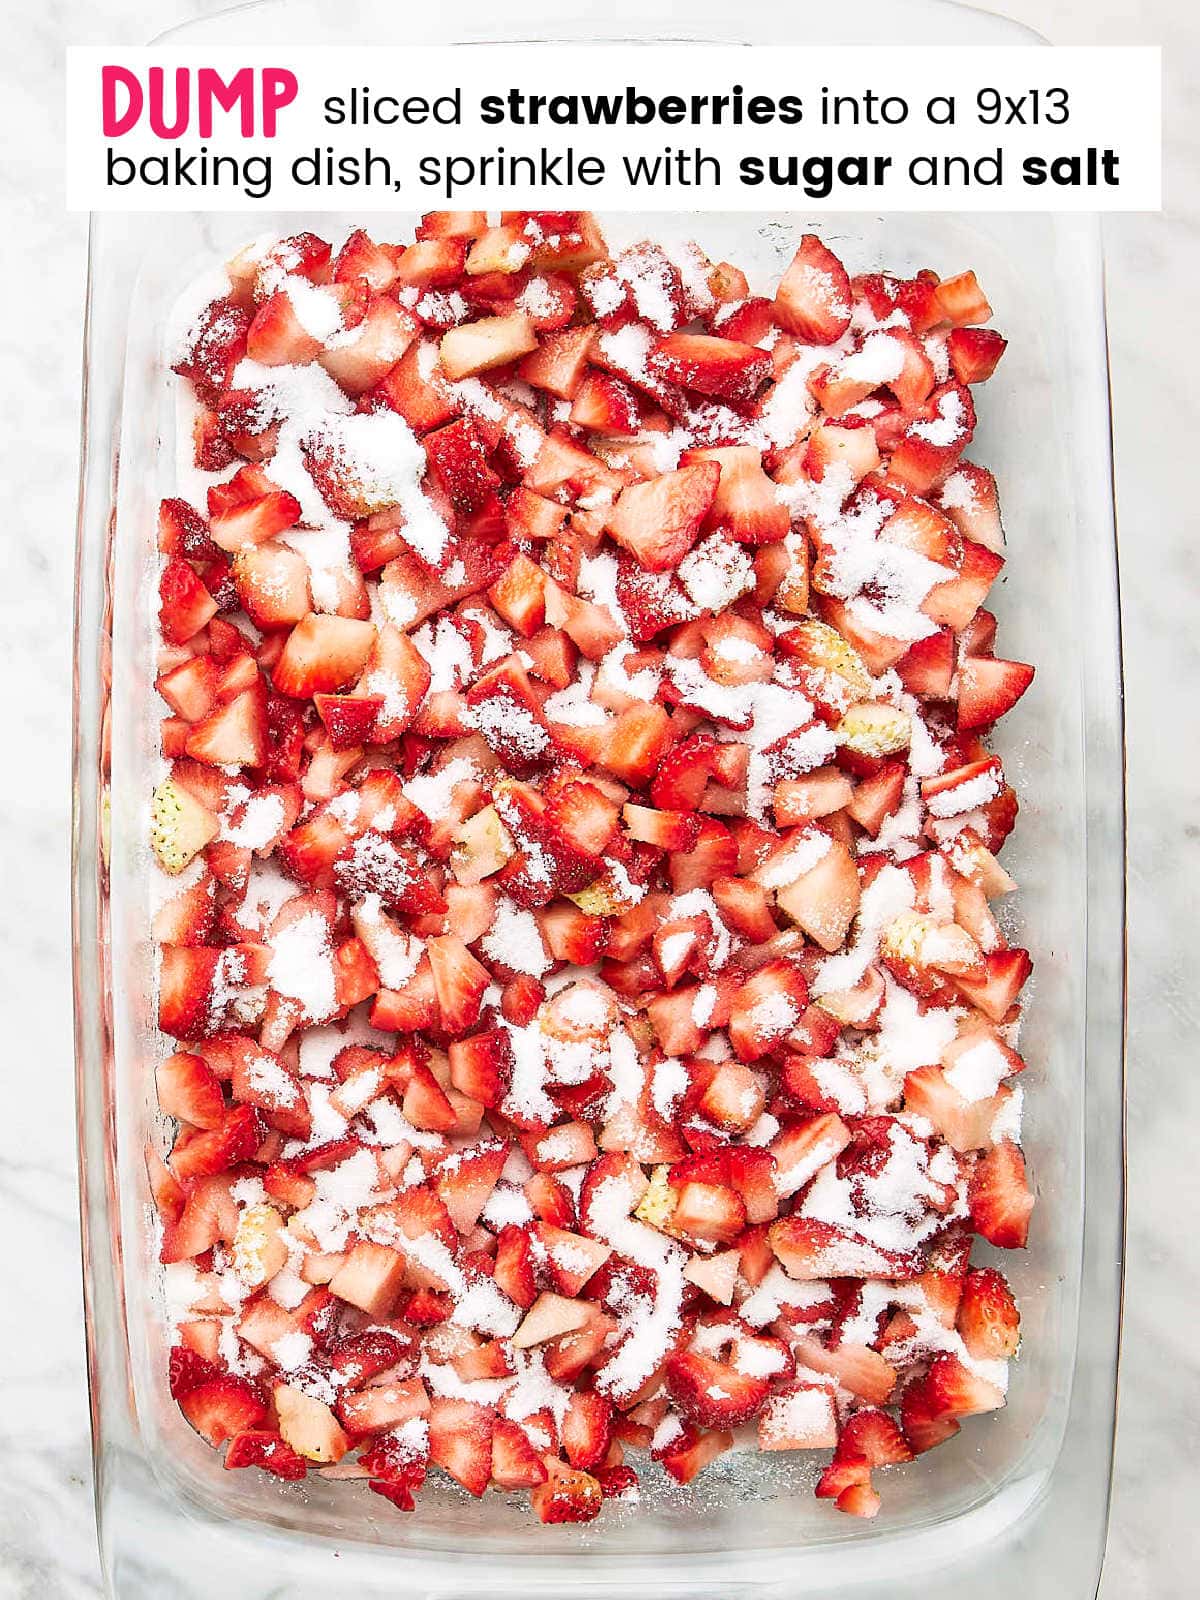 Process Step: Sprinkle diced strawberries with sugar and salt. 